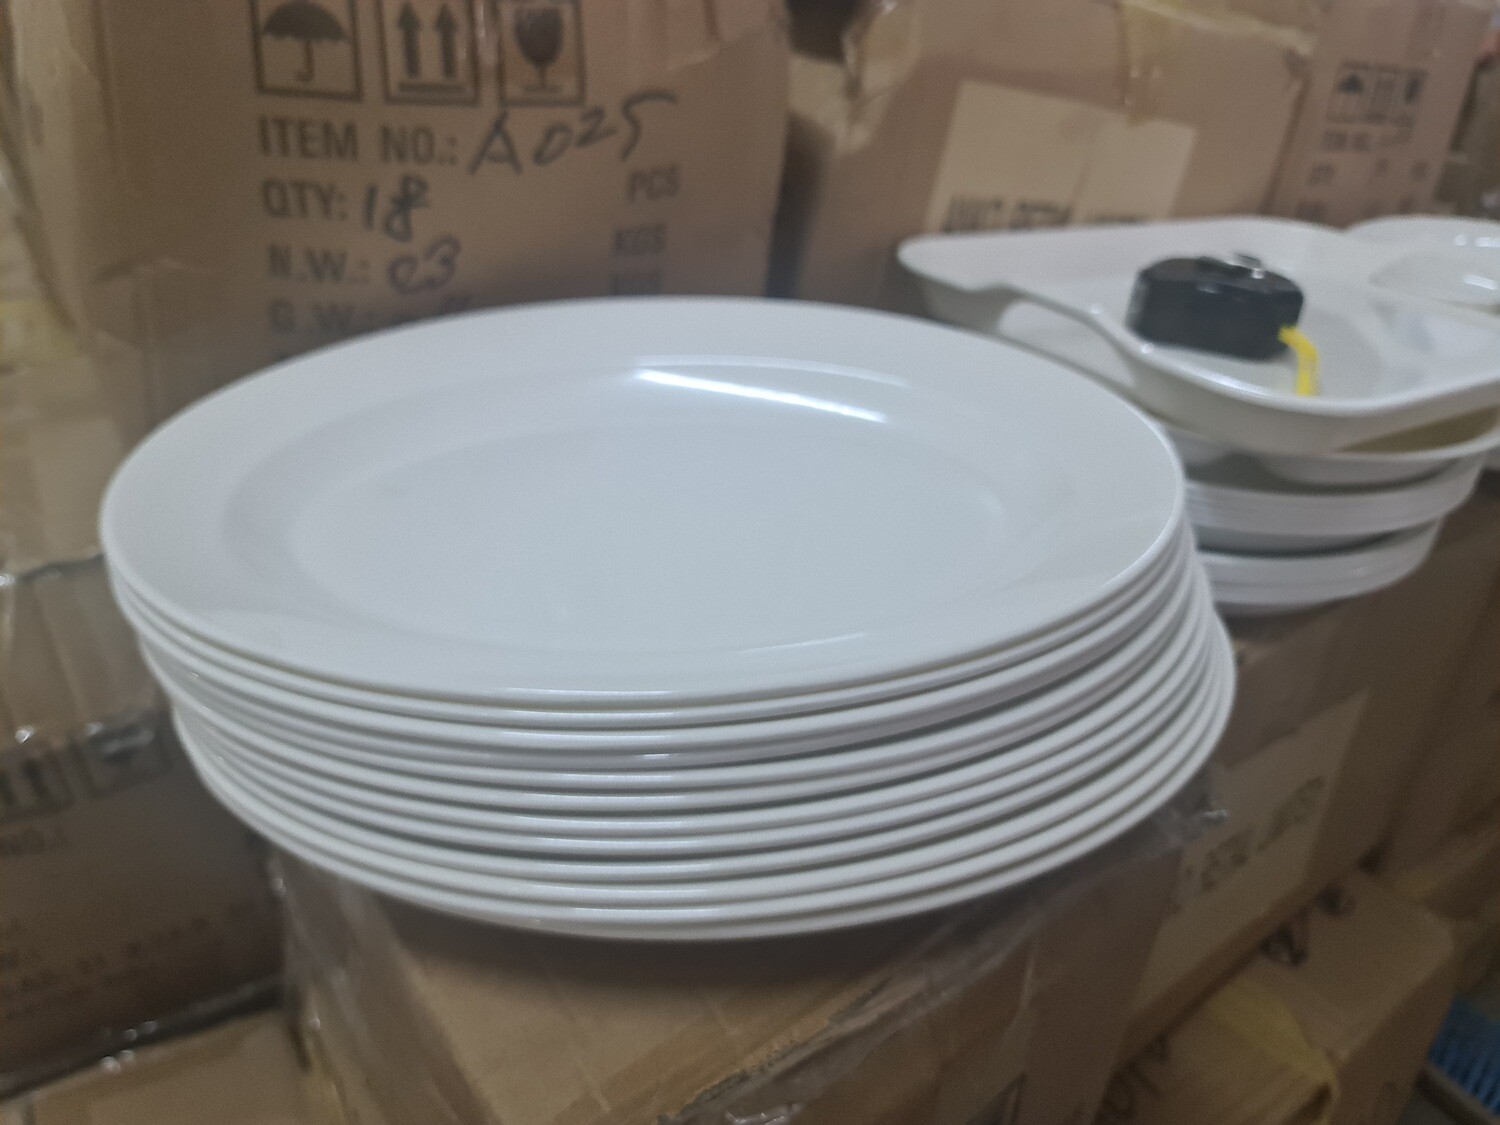 Melamine large oval serving plates 13 inch long (set of 6 plates)